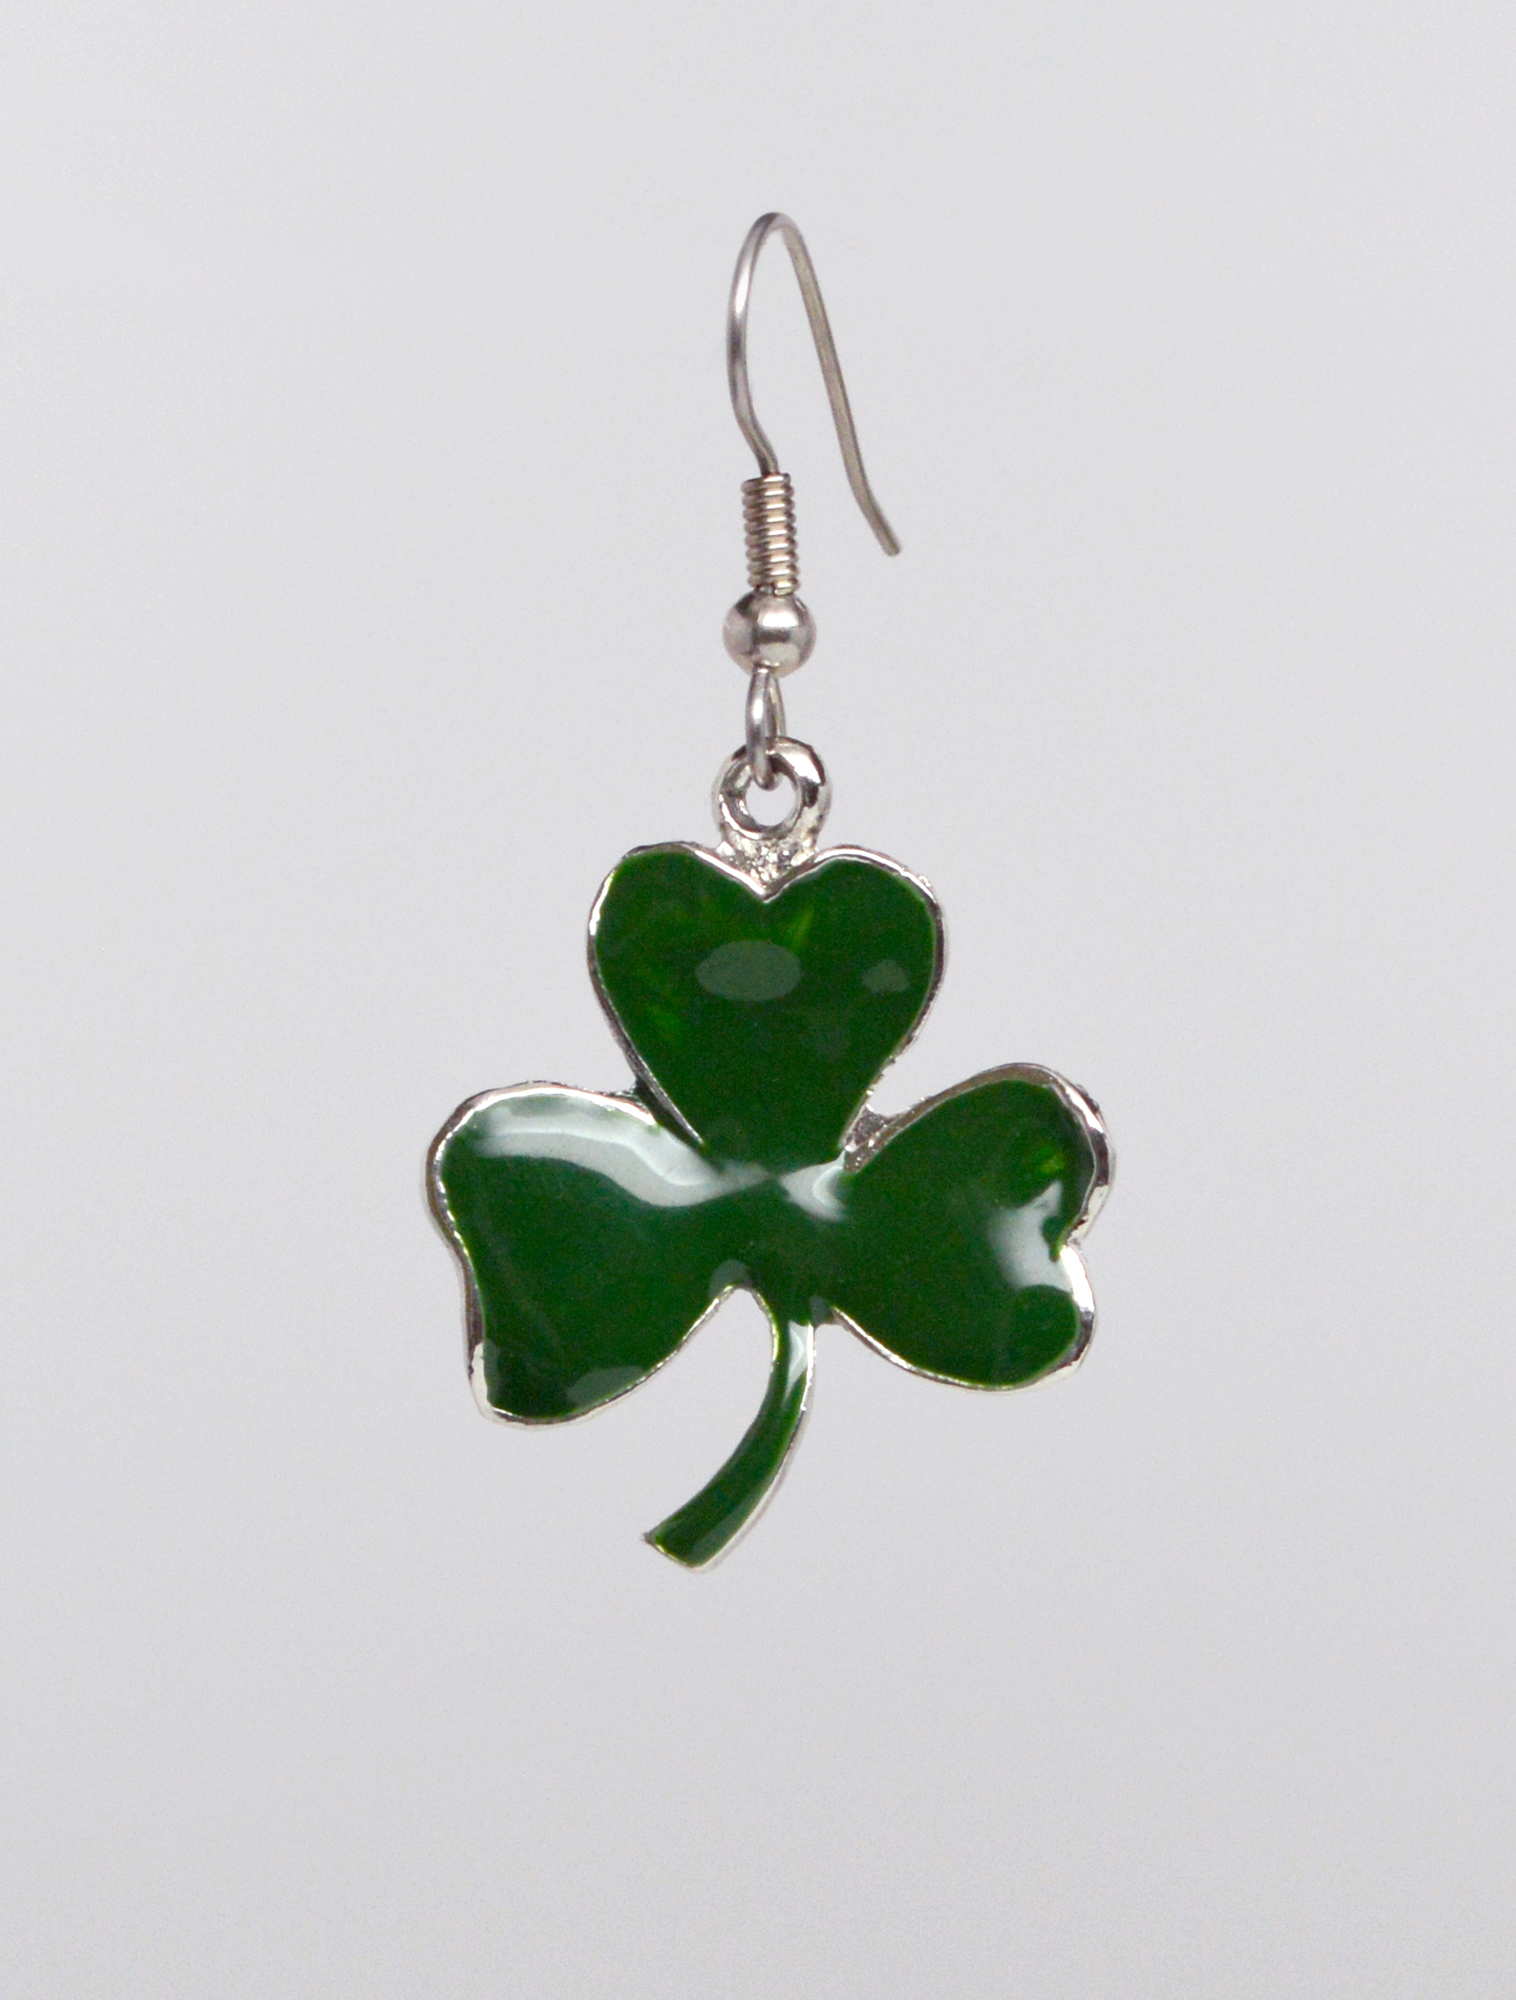 St. Patrick's Day Irish Shamrock Dangle Earrings Green Enamel Silver Finish Pewter Real Metal #1037 - image 4 of 6